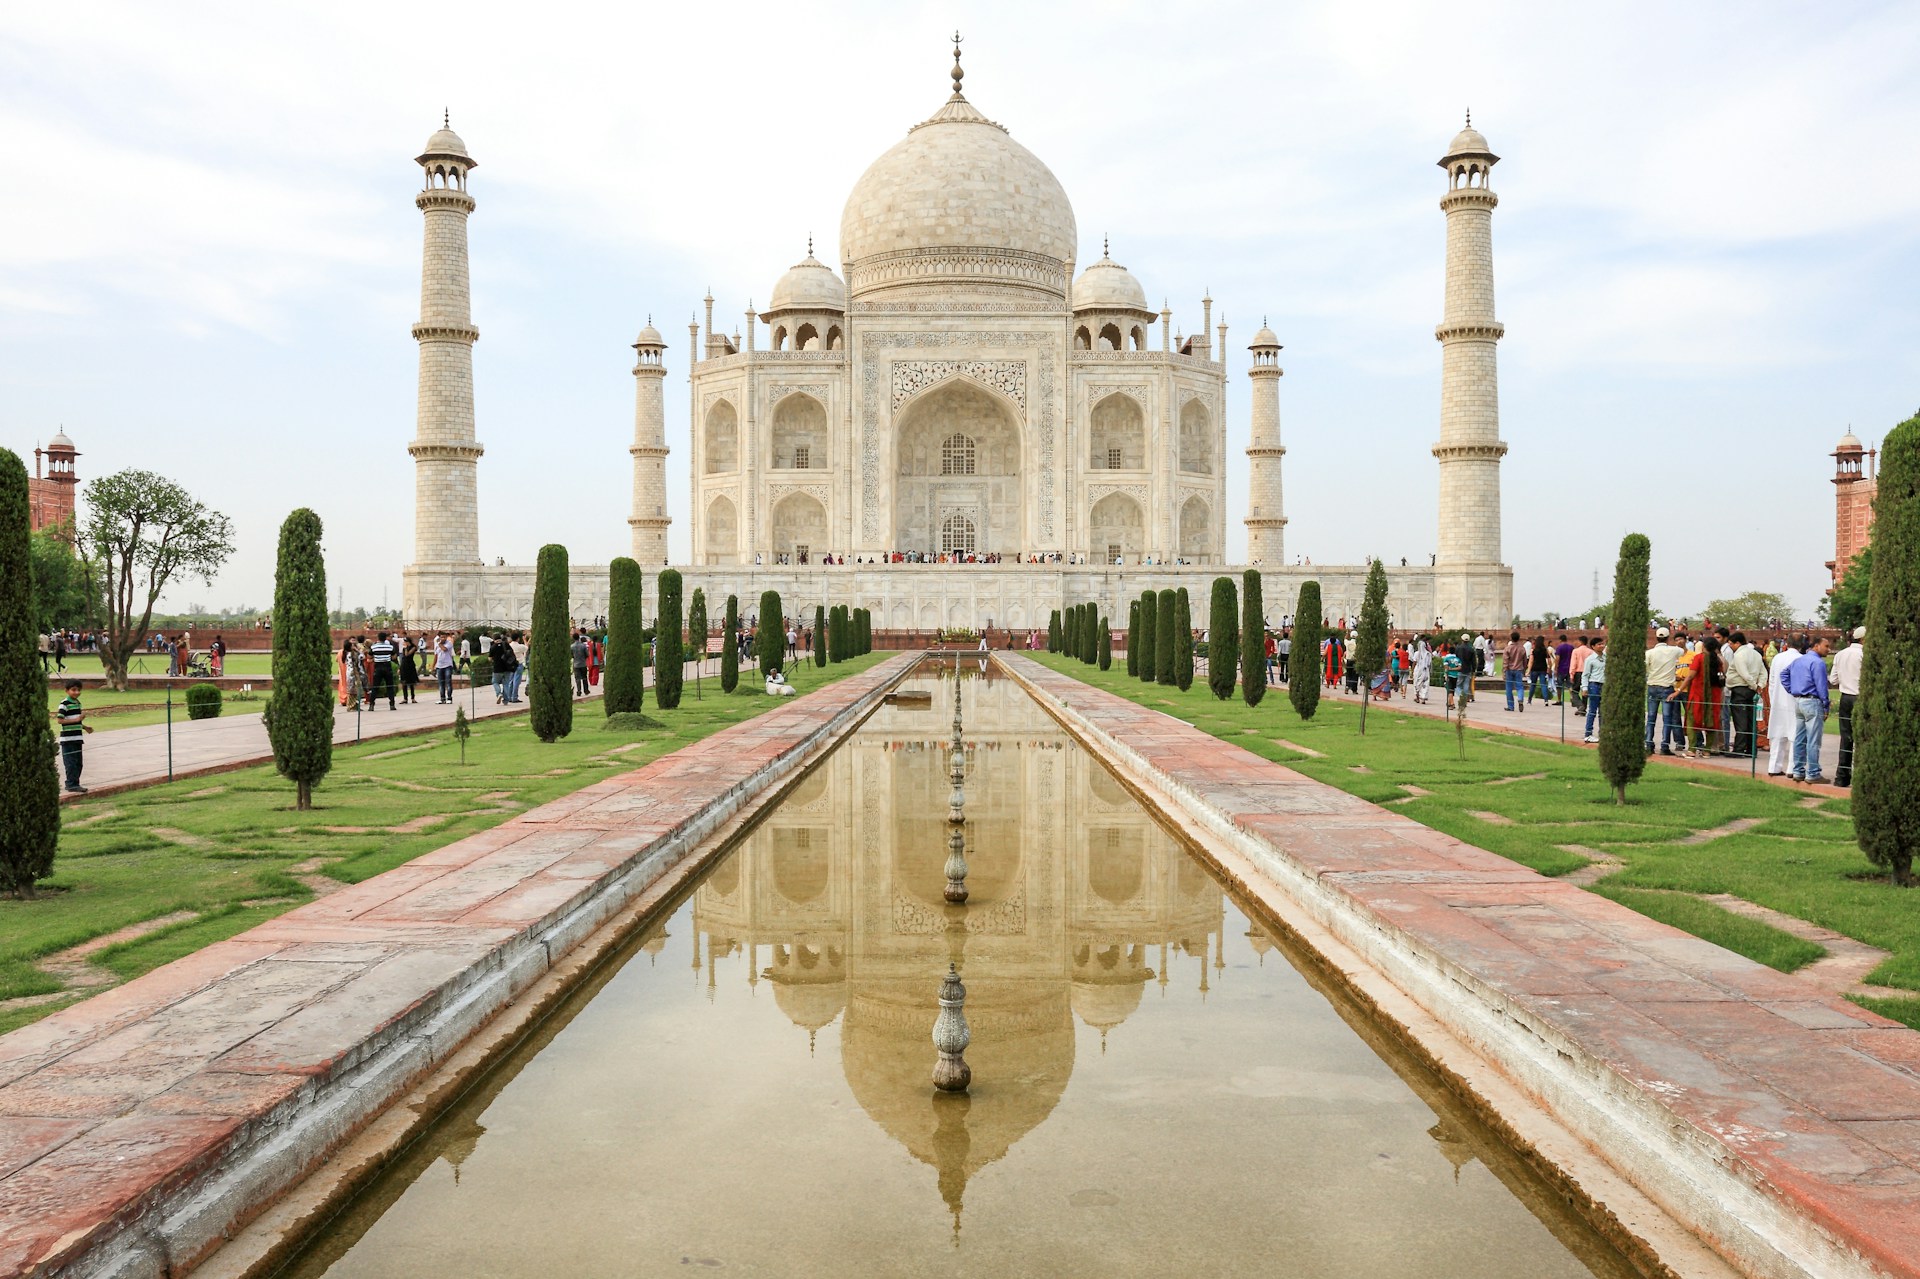 Tourist Attractions from India - Taj Mahal